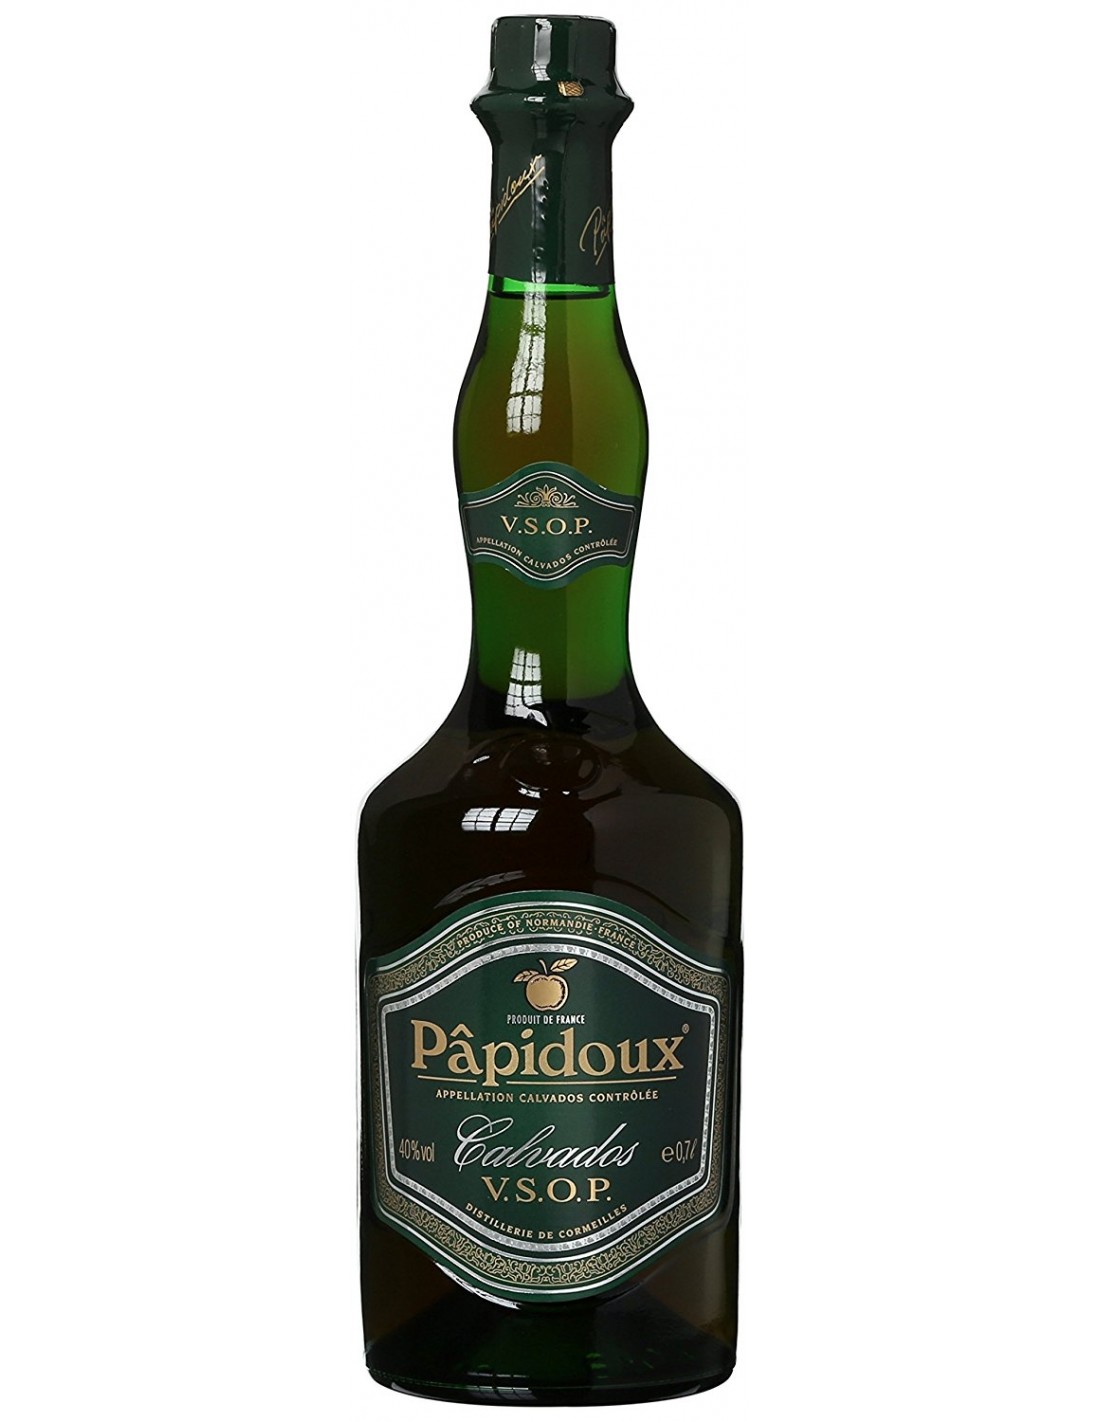 Brandy Papidoux Calvados VSOP, 40% alc., 0.7L, Franta alcooldiscount.ro